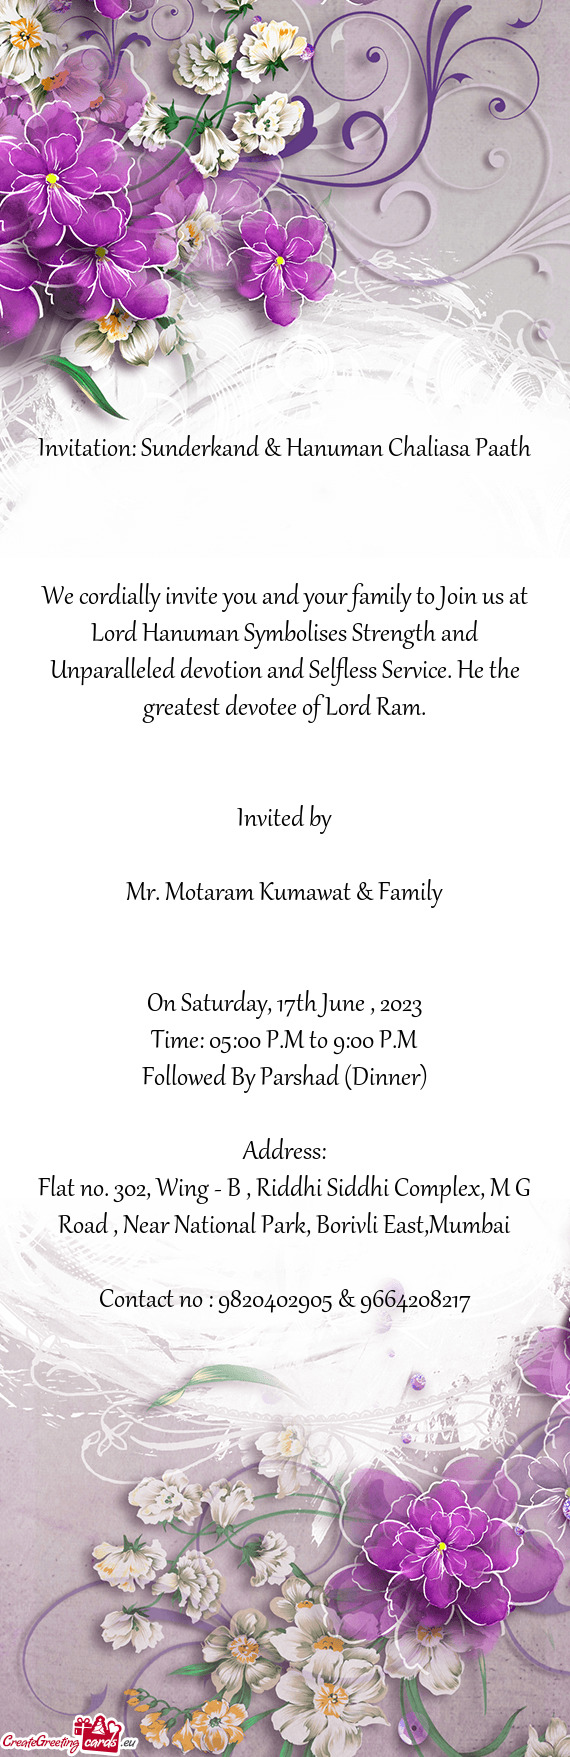 Invitation: Sunderkand & Hanuman Chaliasa Paath